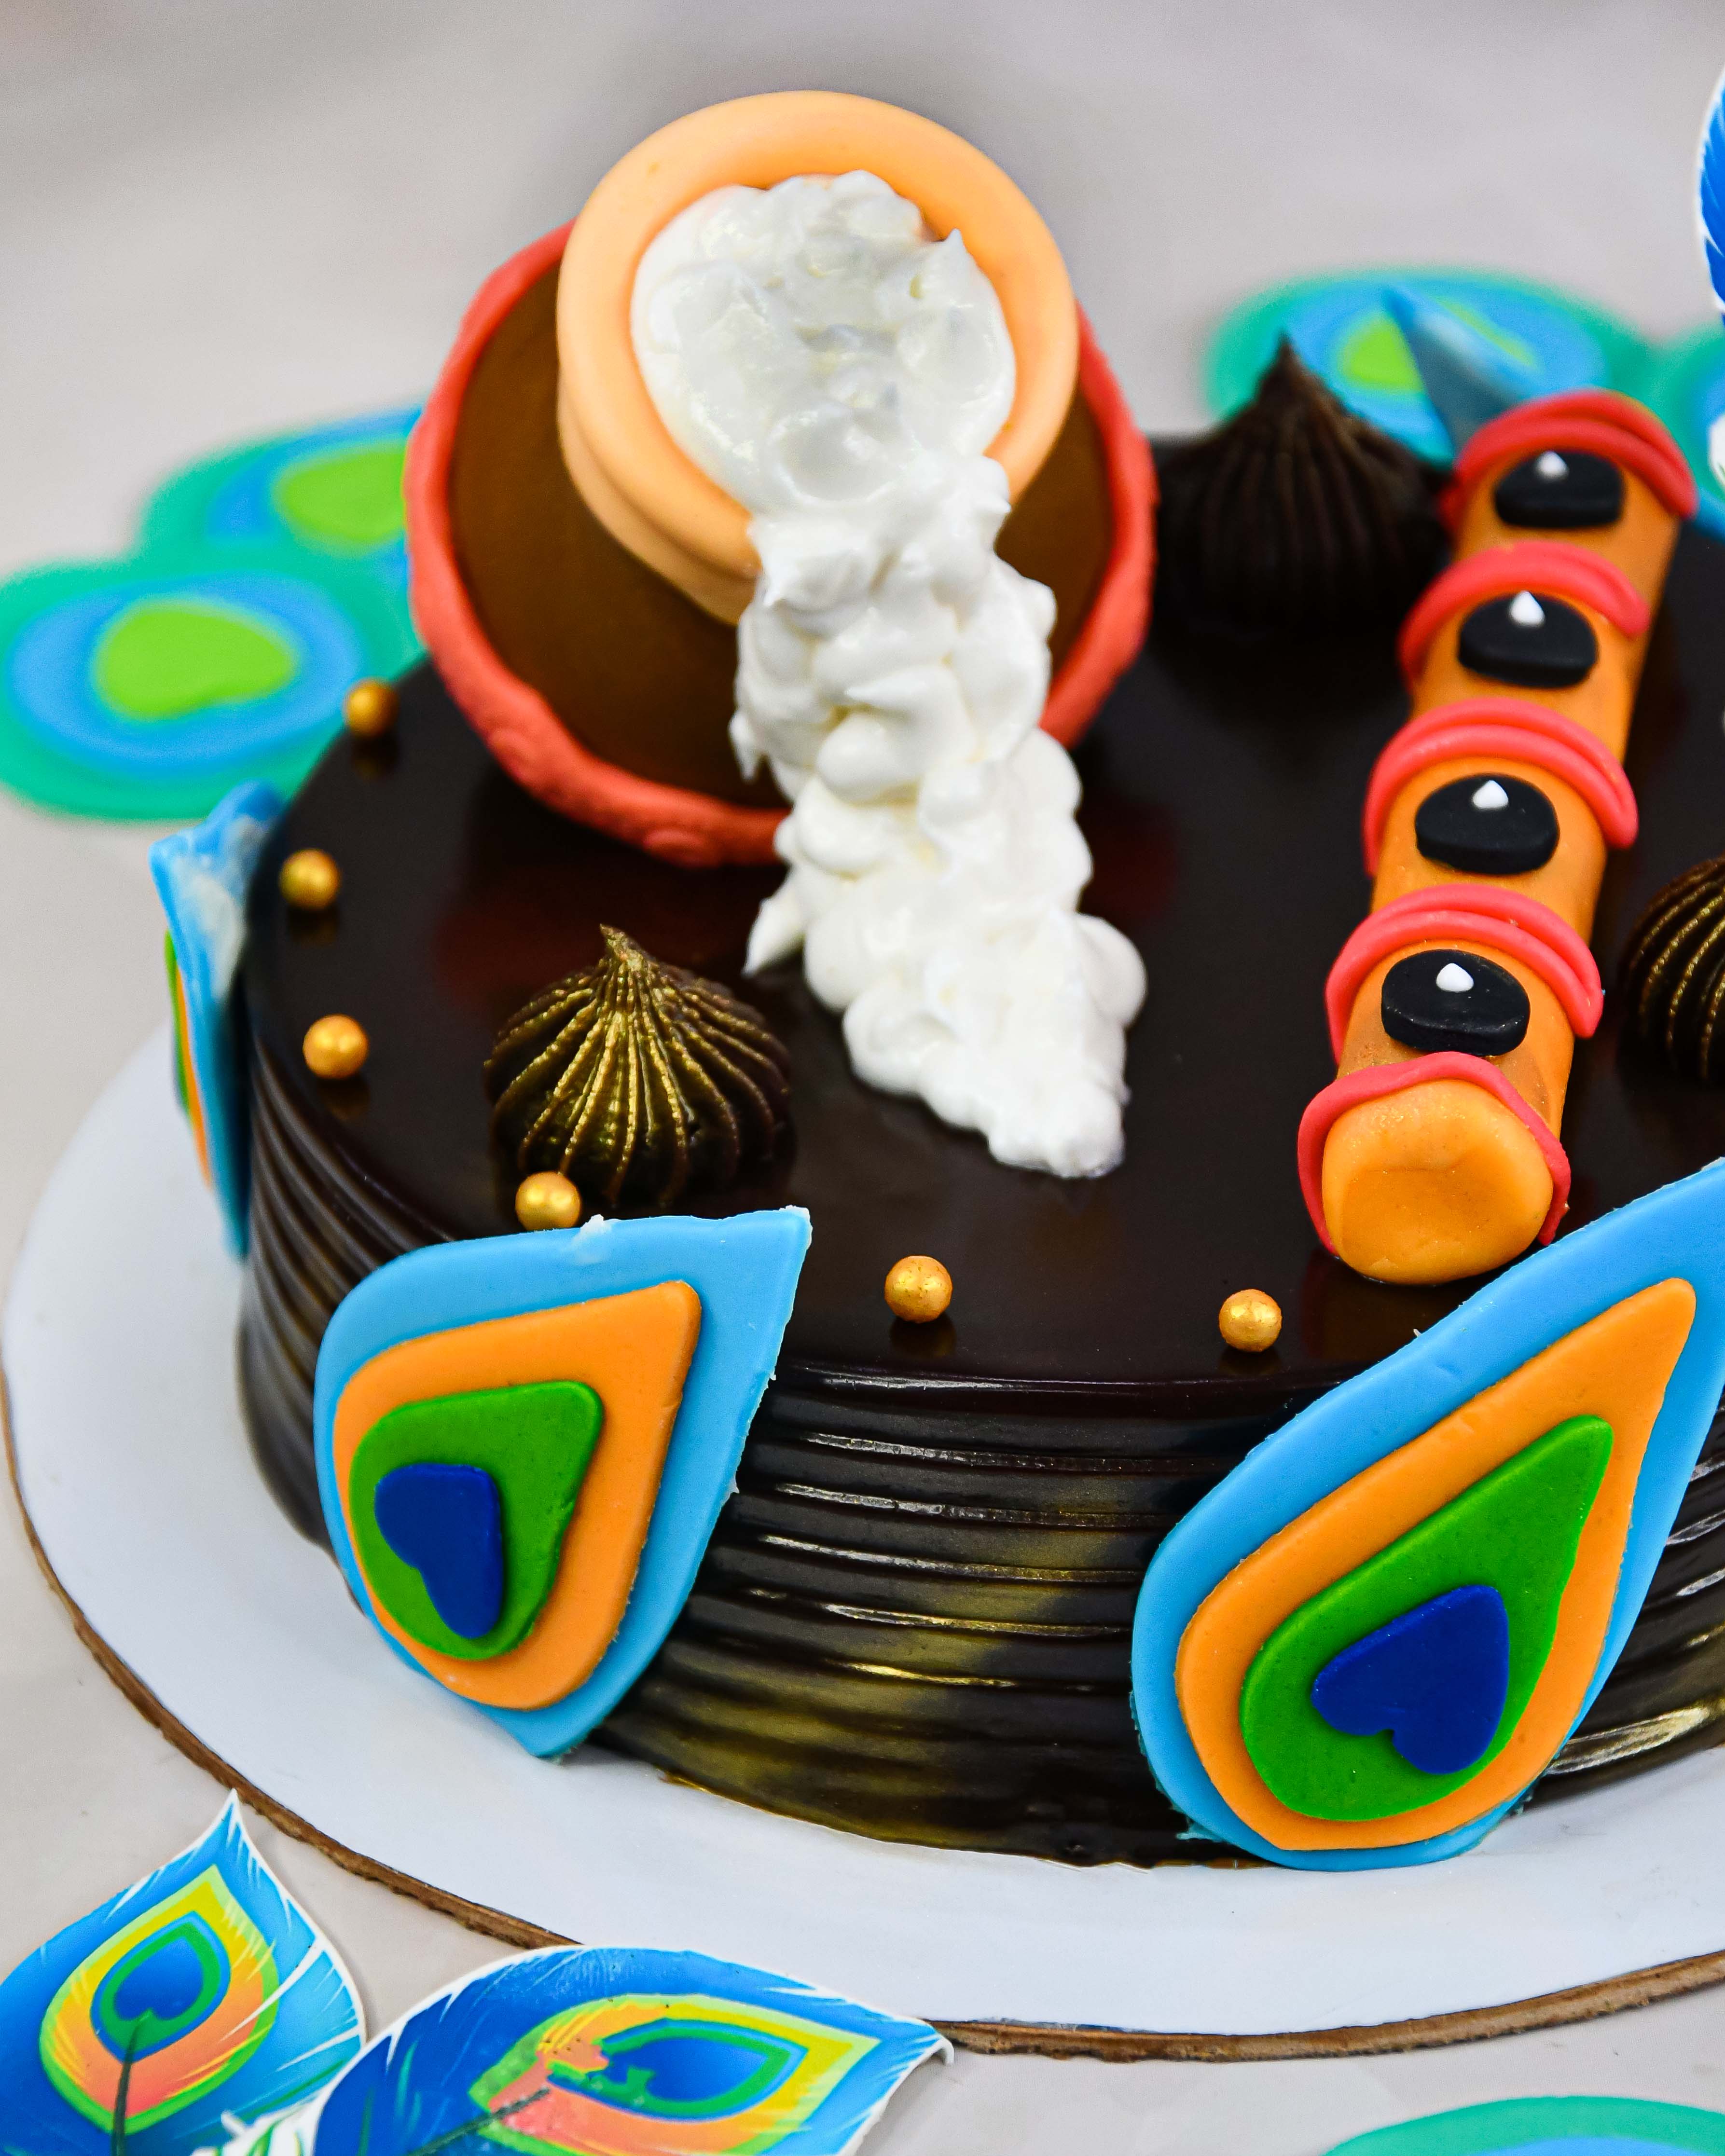 Krishna Birthday Cake Ideas Images (Pictures) | Creative birthday cakes,  Baby cake design, Simple cake designs